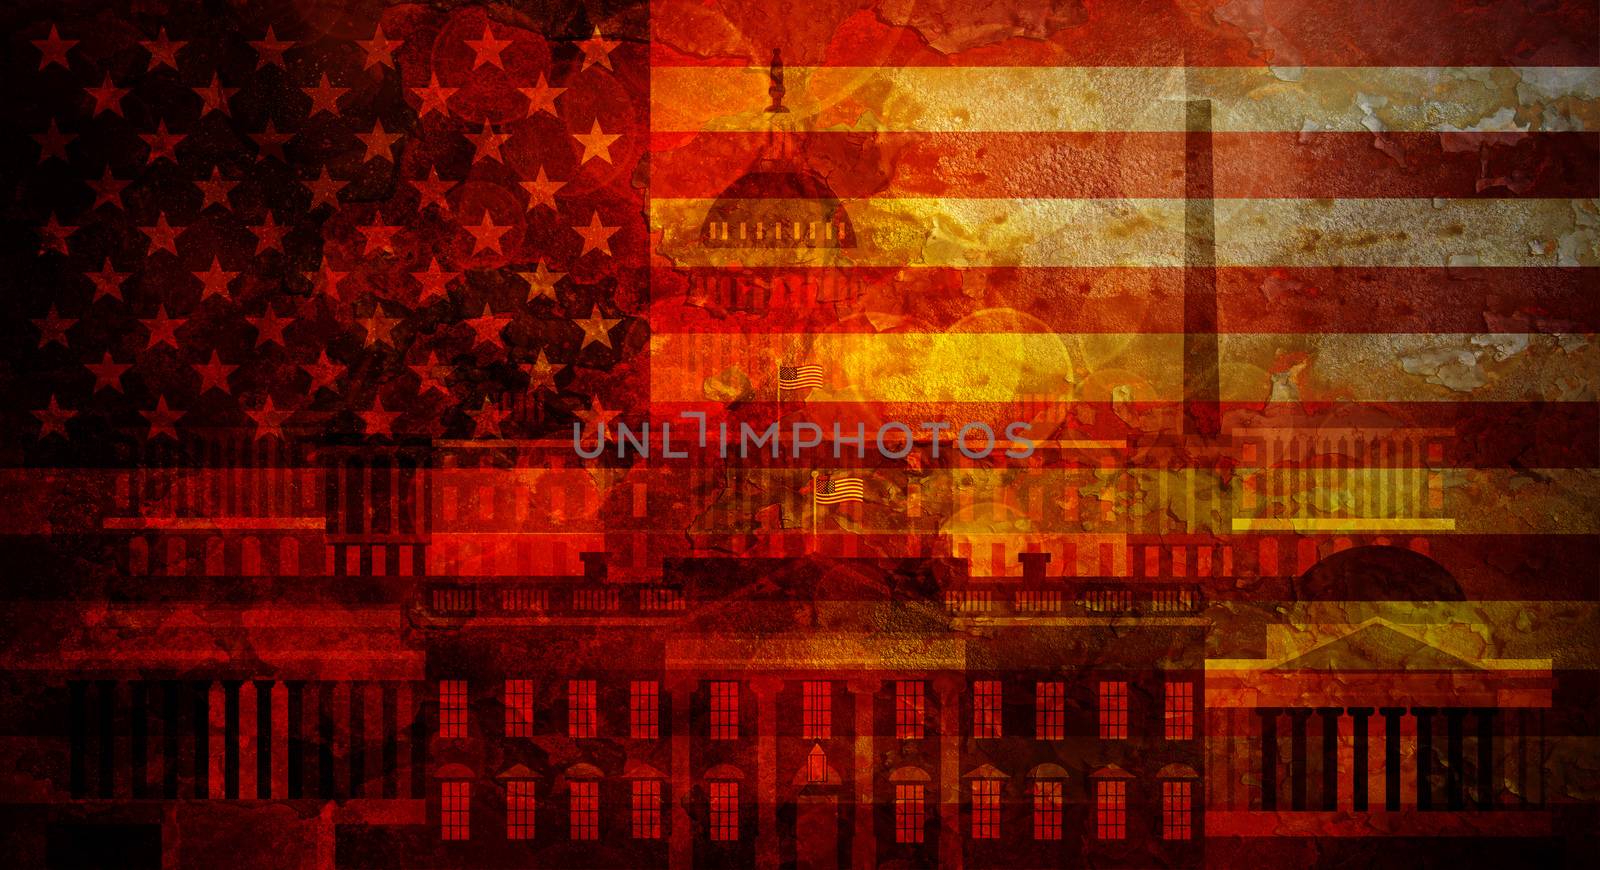 Washington DC Capitol White House USA Flag Silhouette with Grunge Texture Background Illustration